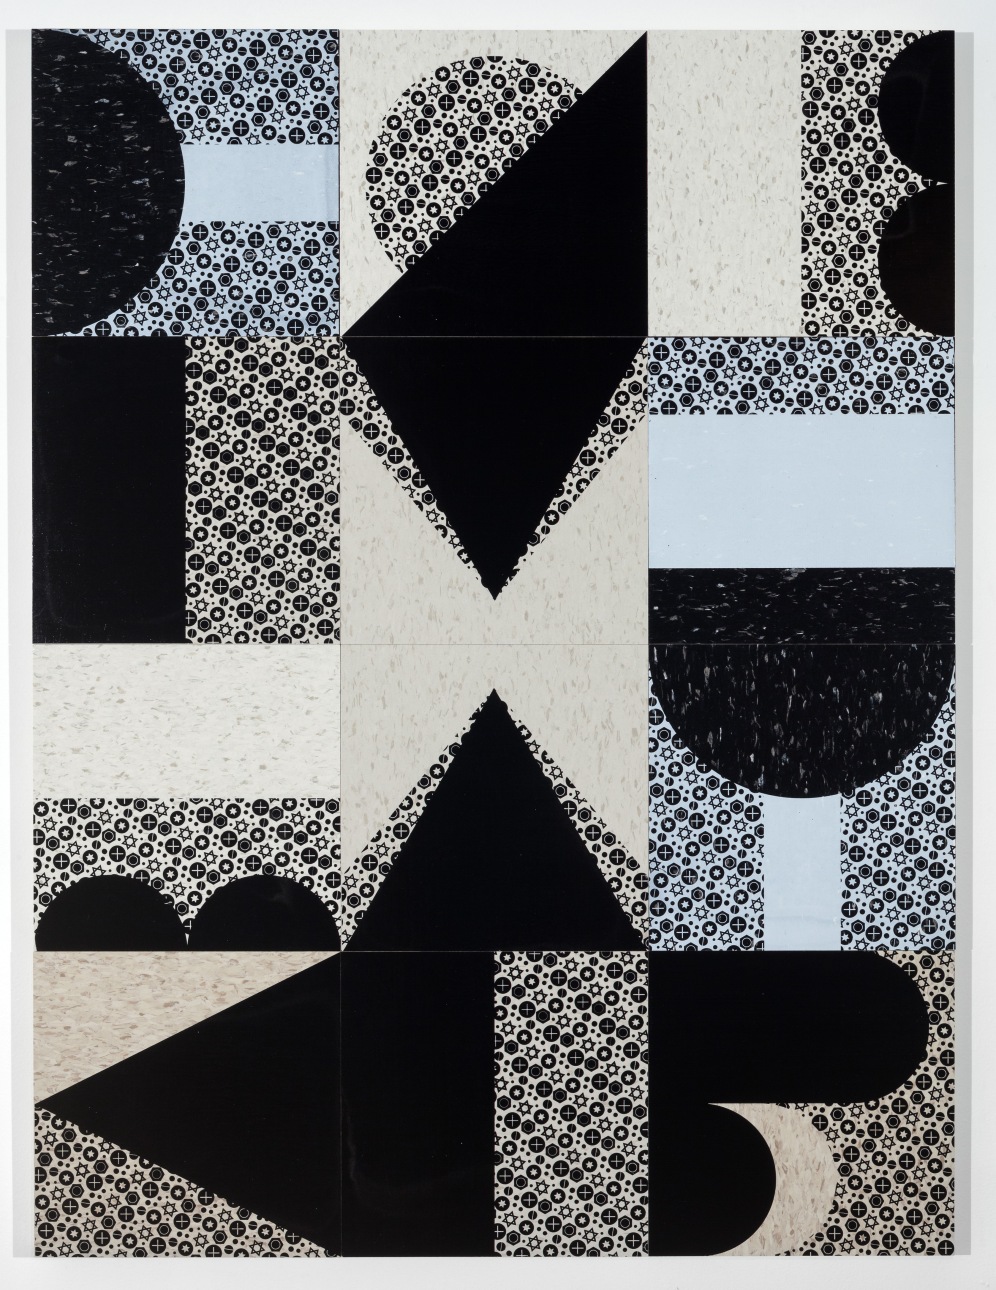 Clutch, 36" x 48", screenprints on compositive vinyl tile and wood panel, 2019.